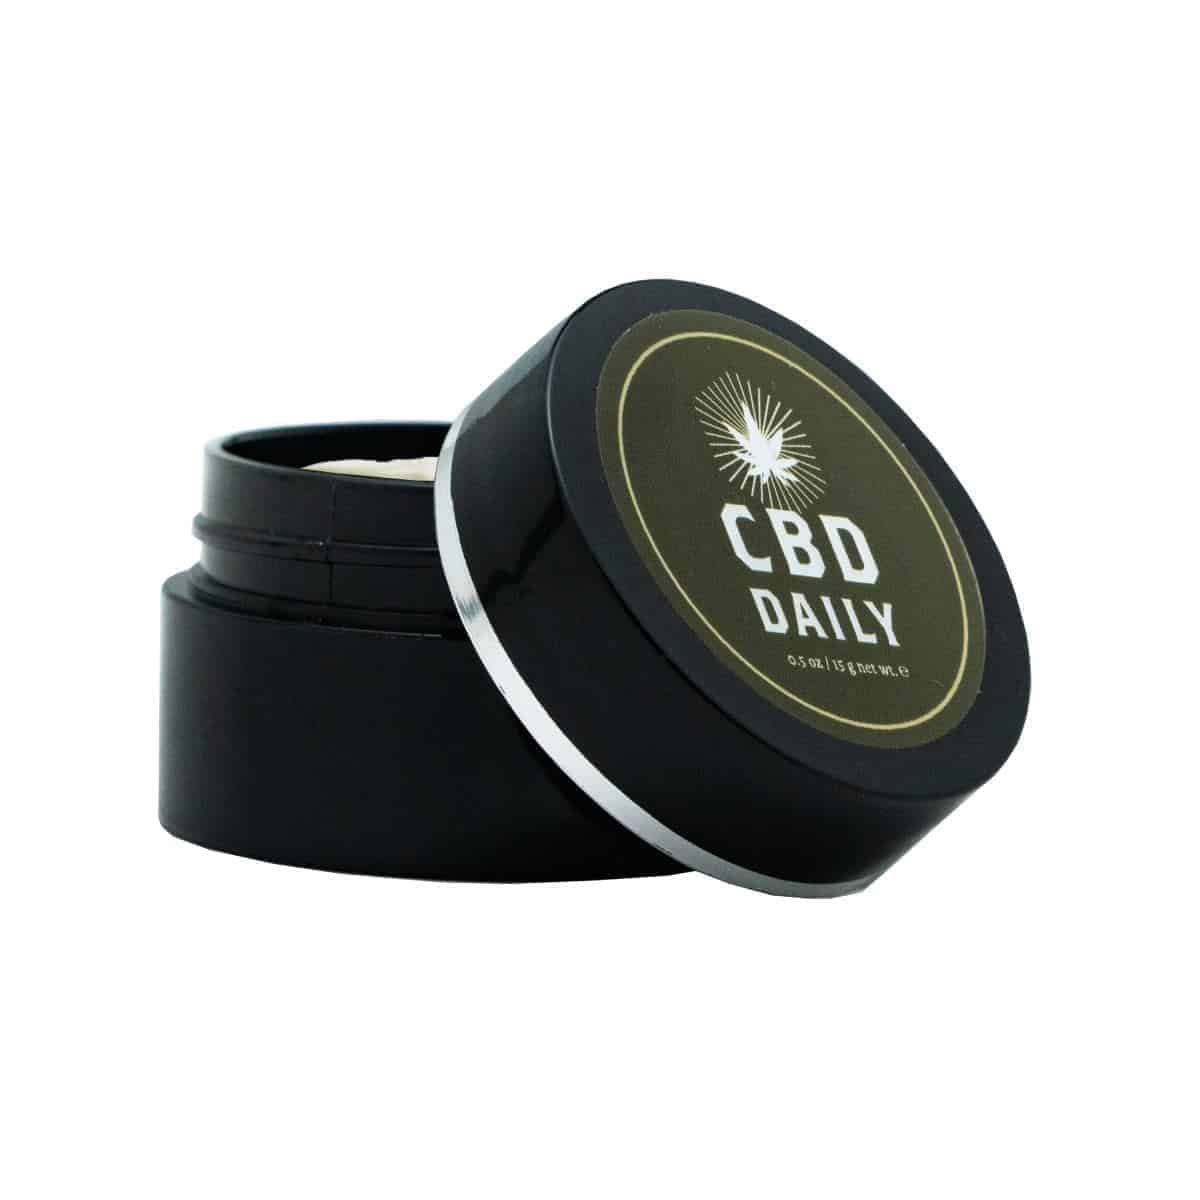 CBD Daily Intensive Cream - Triple Strength - 0.5 oz | Buy CBD Cream near me | CBD Daily Since 1996